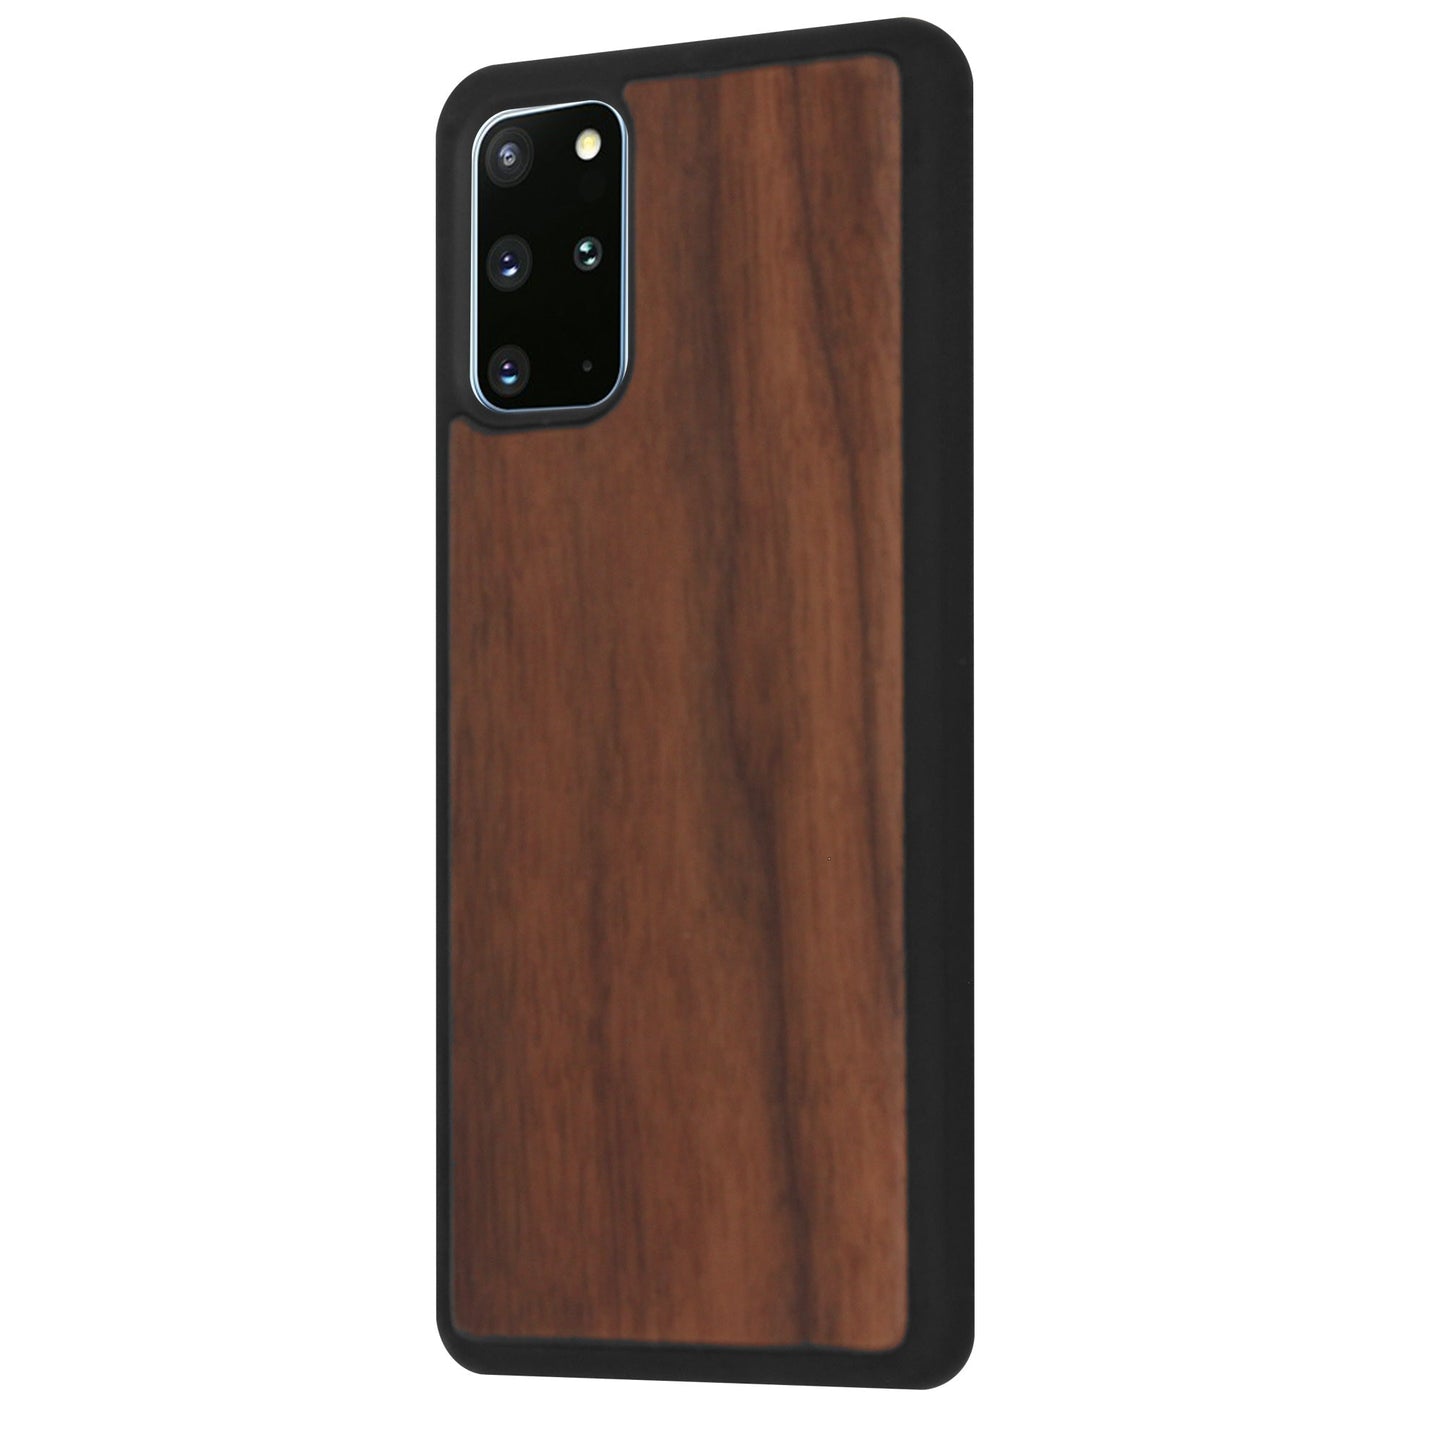 Eden case made of walnut wood for Samsung Galaxy S20 Plus